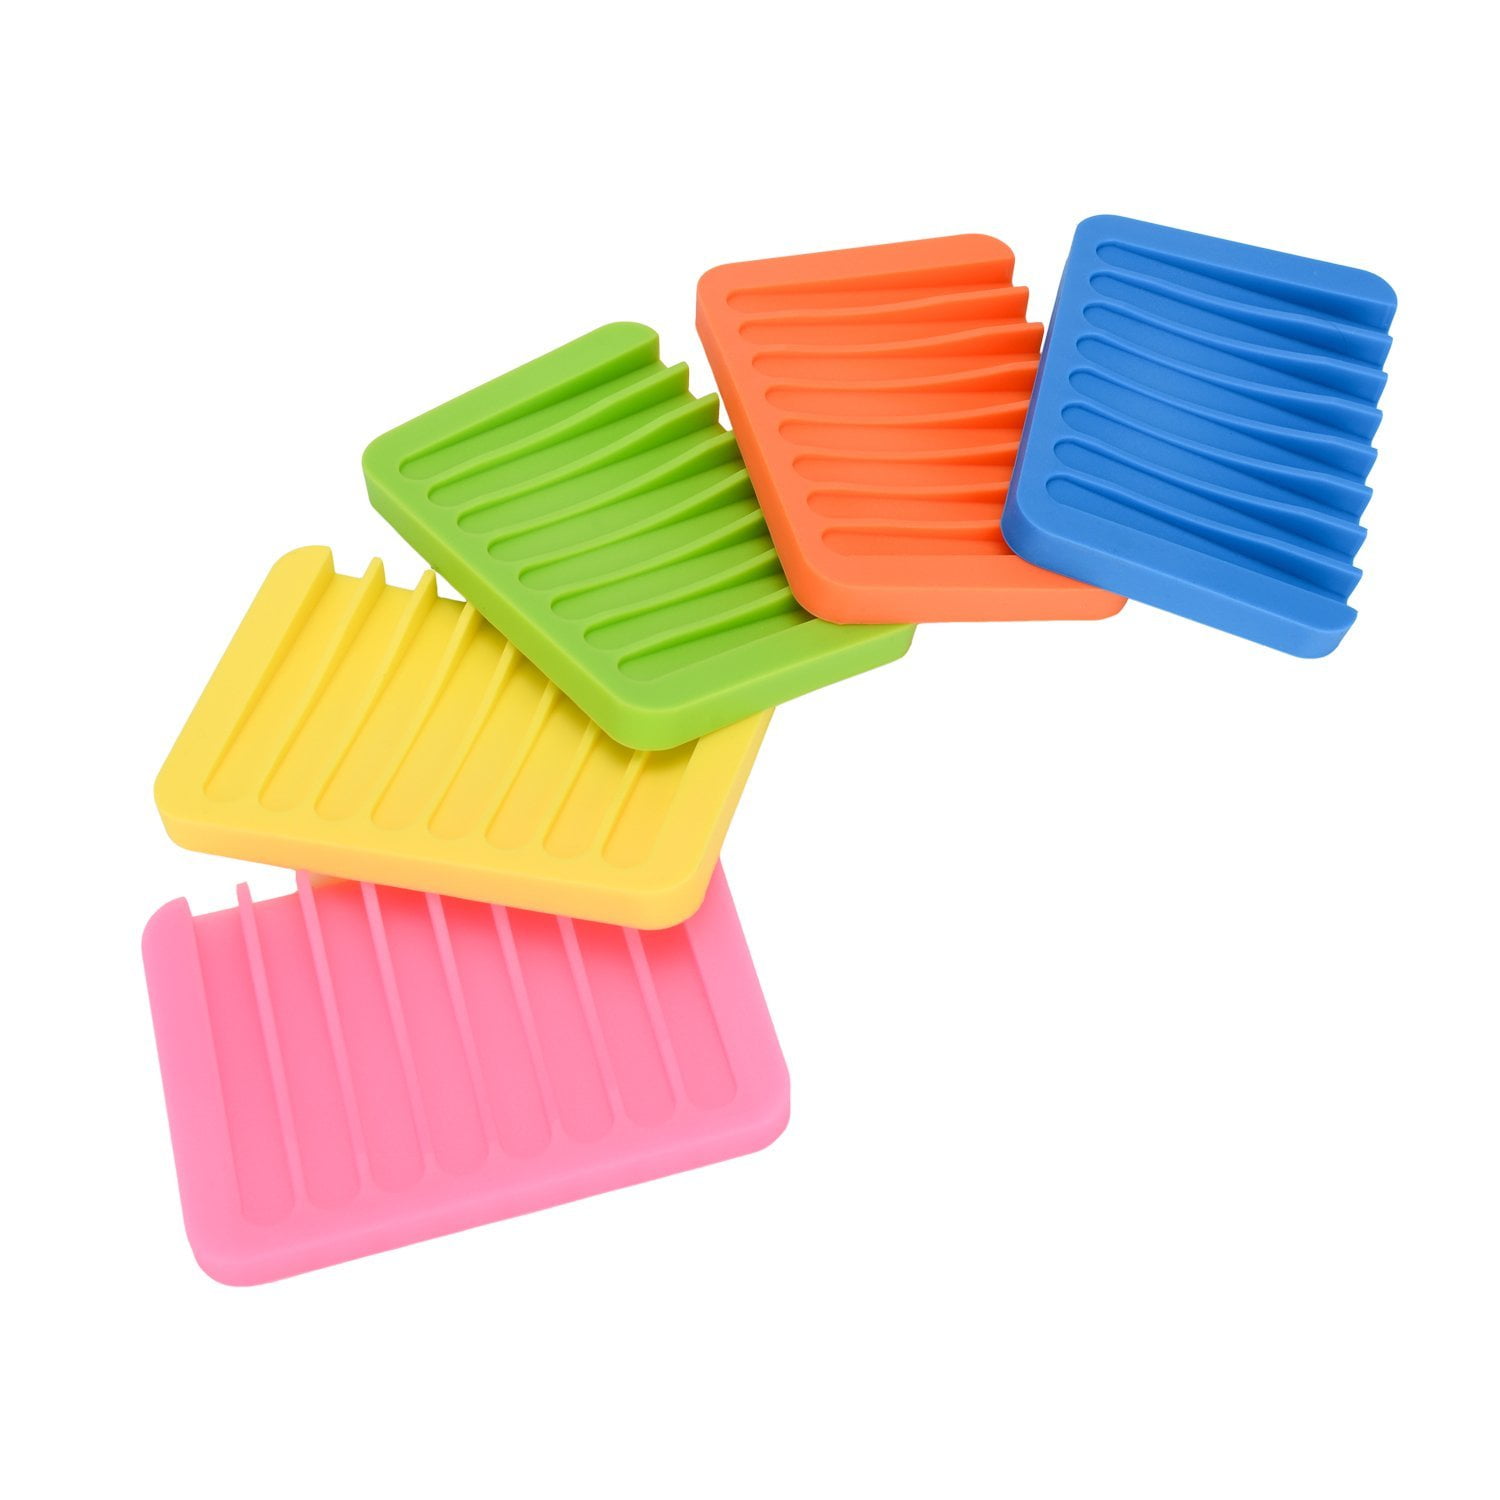 Silicone Soap Holder Flexible Soap Dish Plate Holder Tray Soap Box Contai OH 